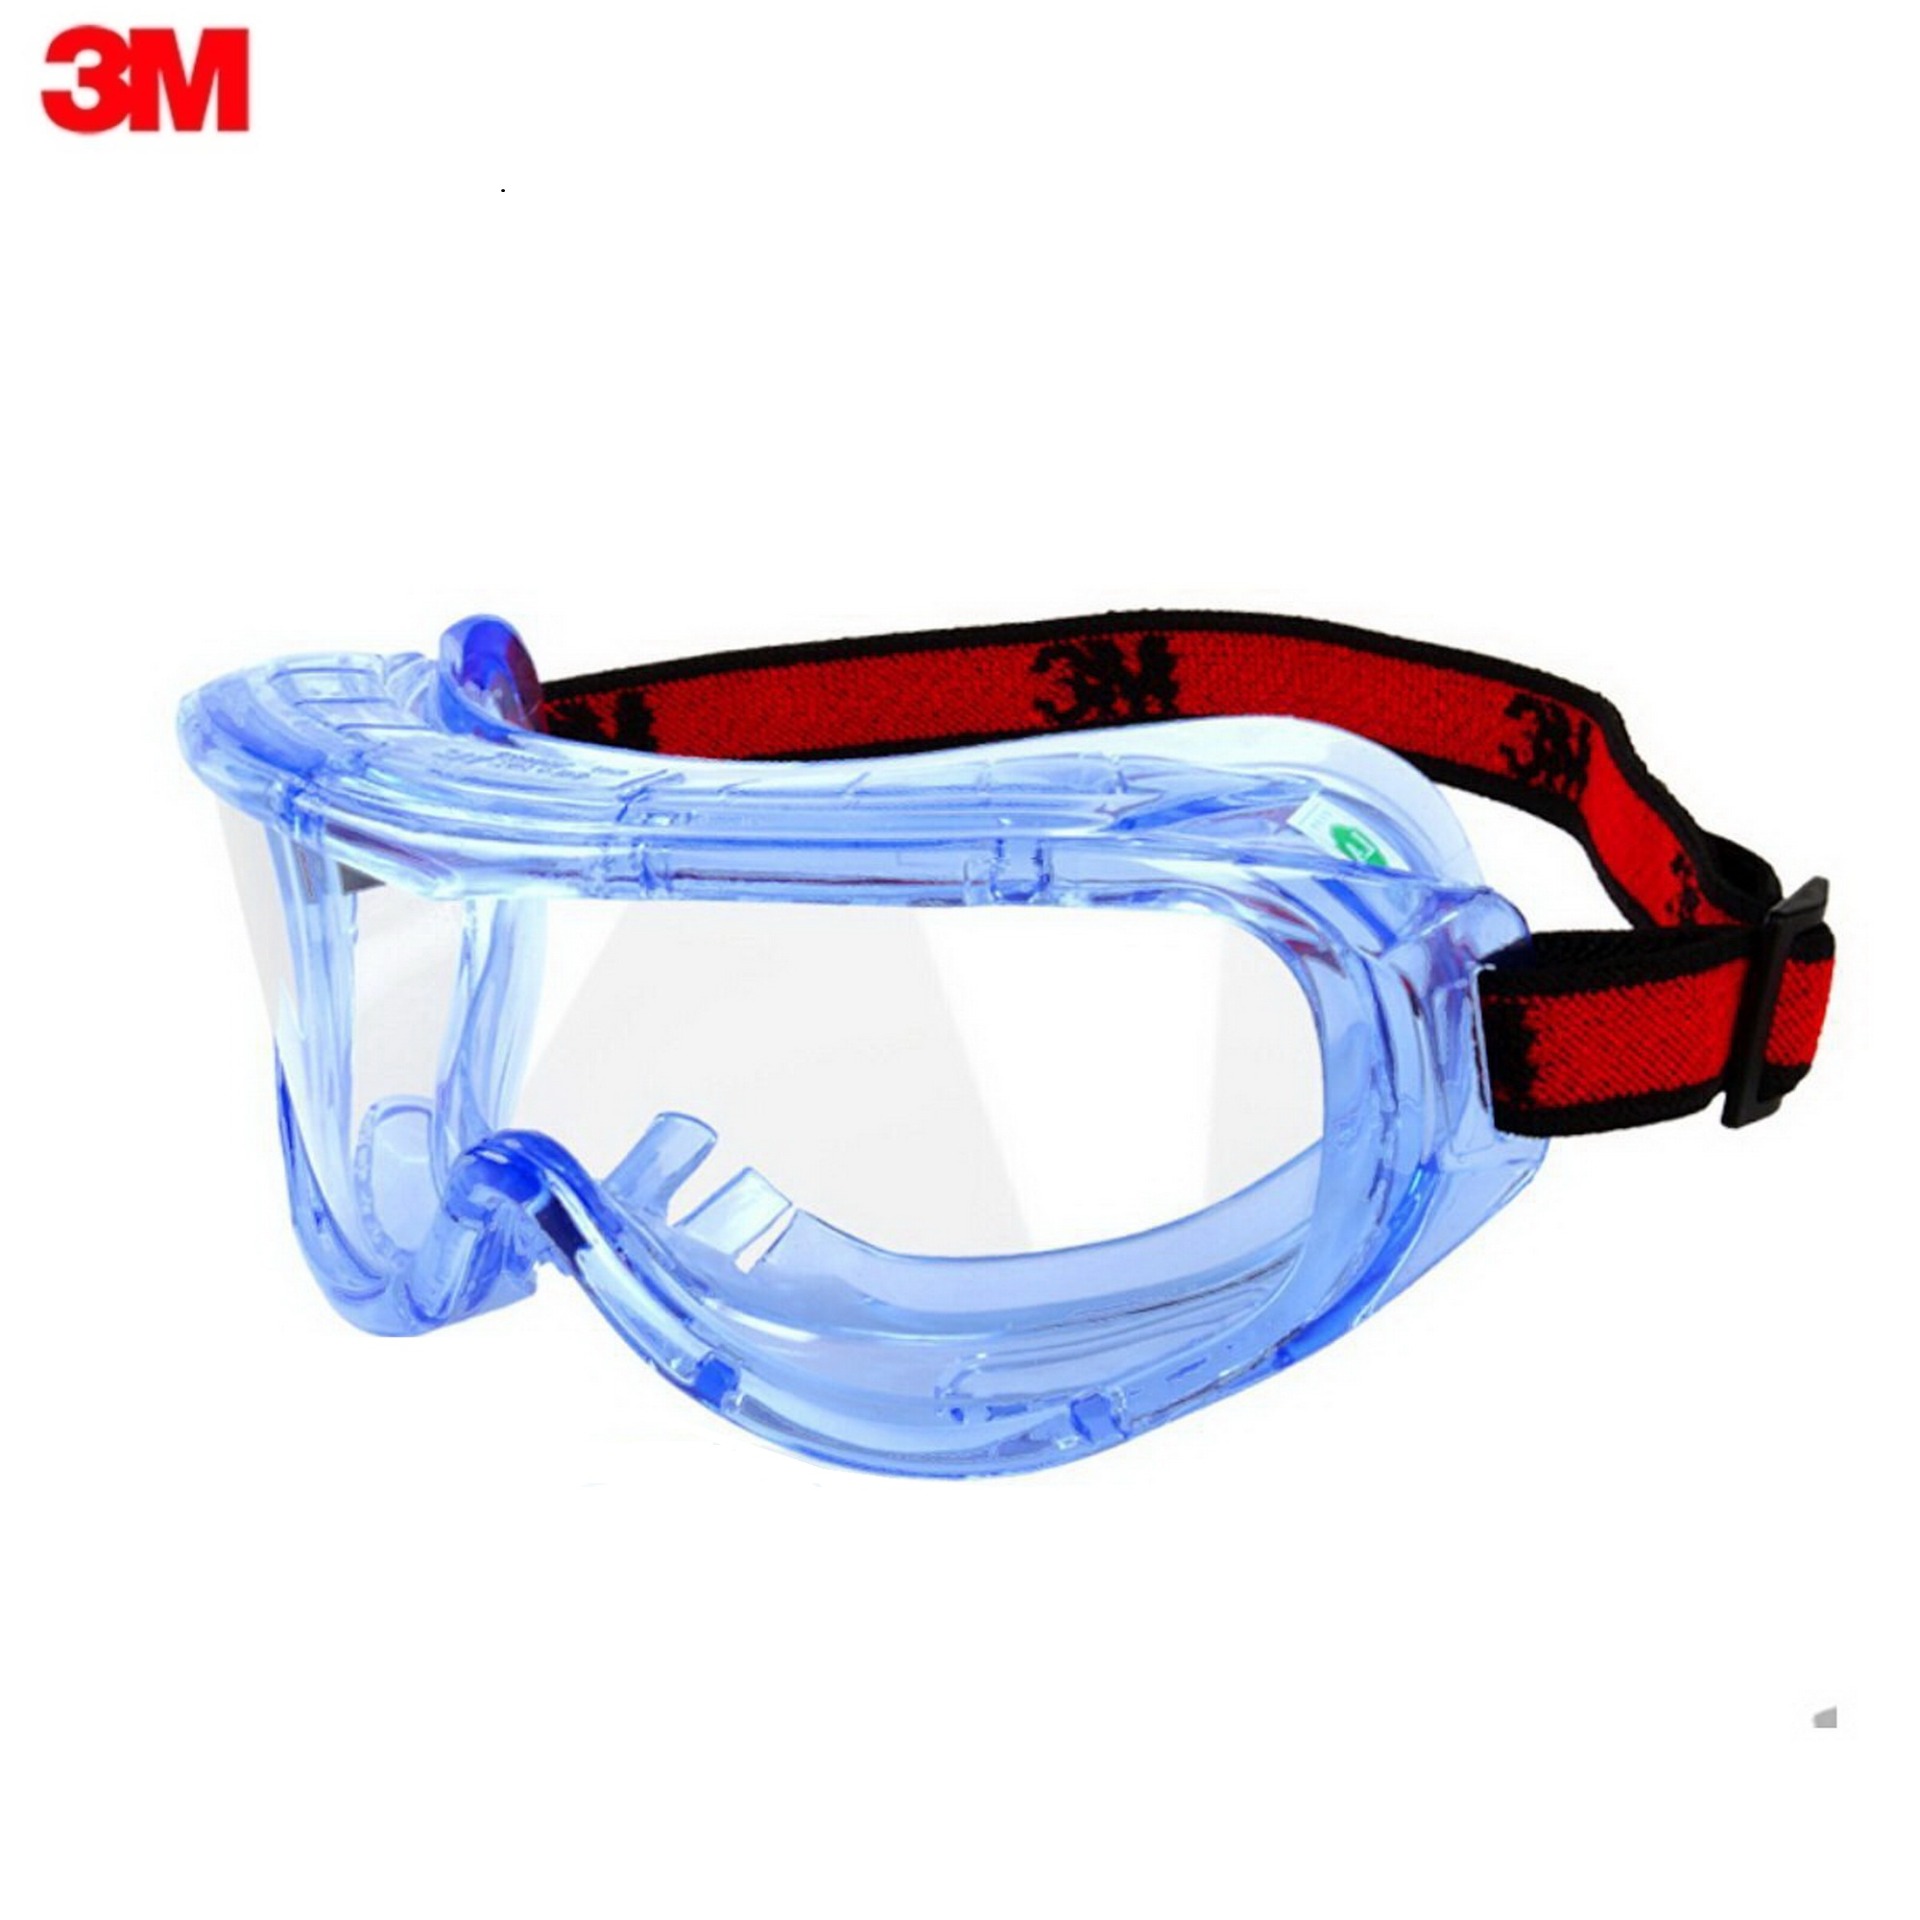 3M 1623 แว่นนิรภัย (แว่นเซฟตี้) แบบครอบตา Anti Fog Goggle Safety Eyewear Protection